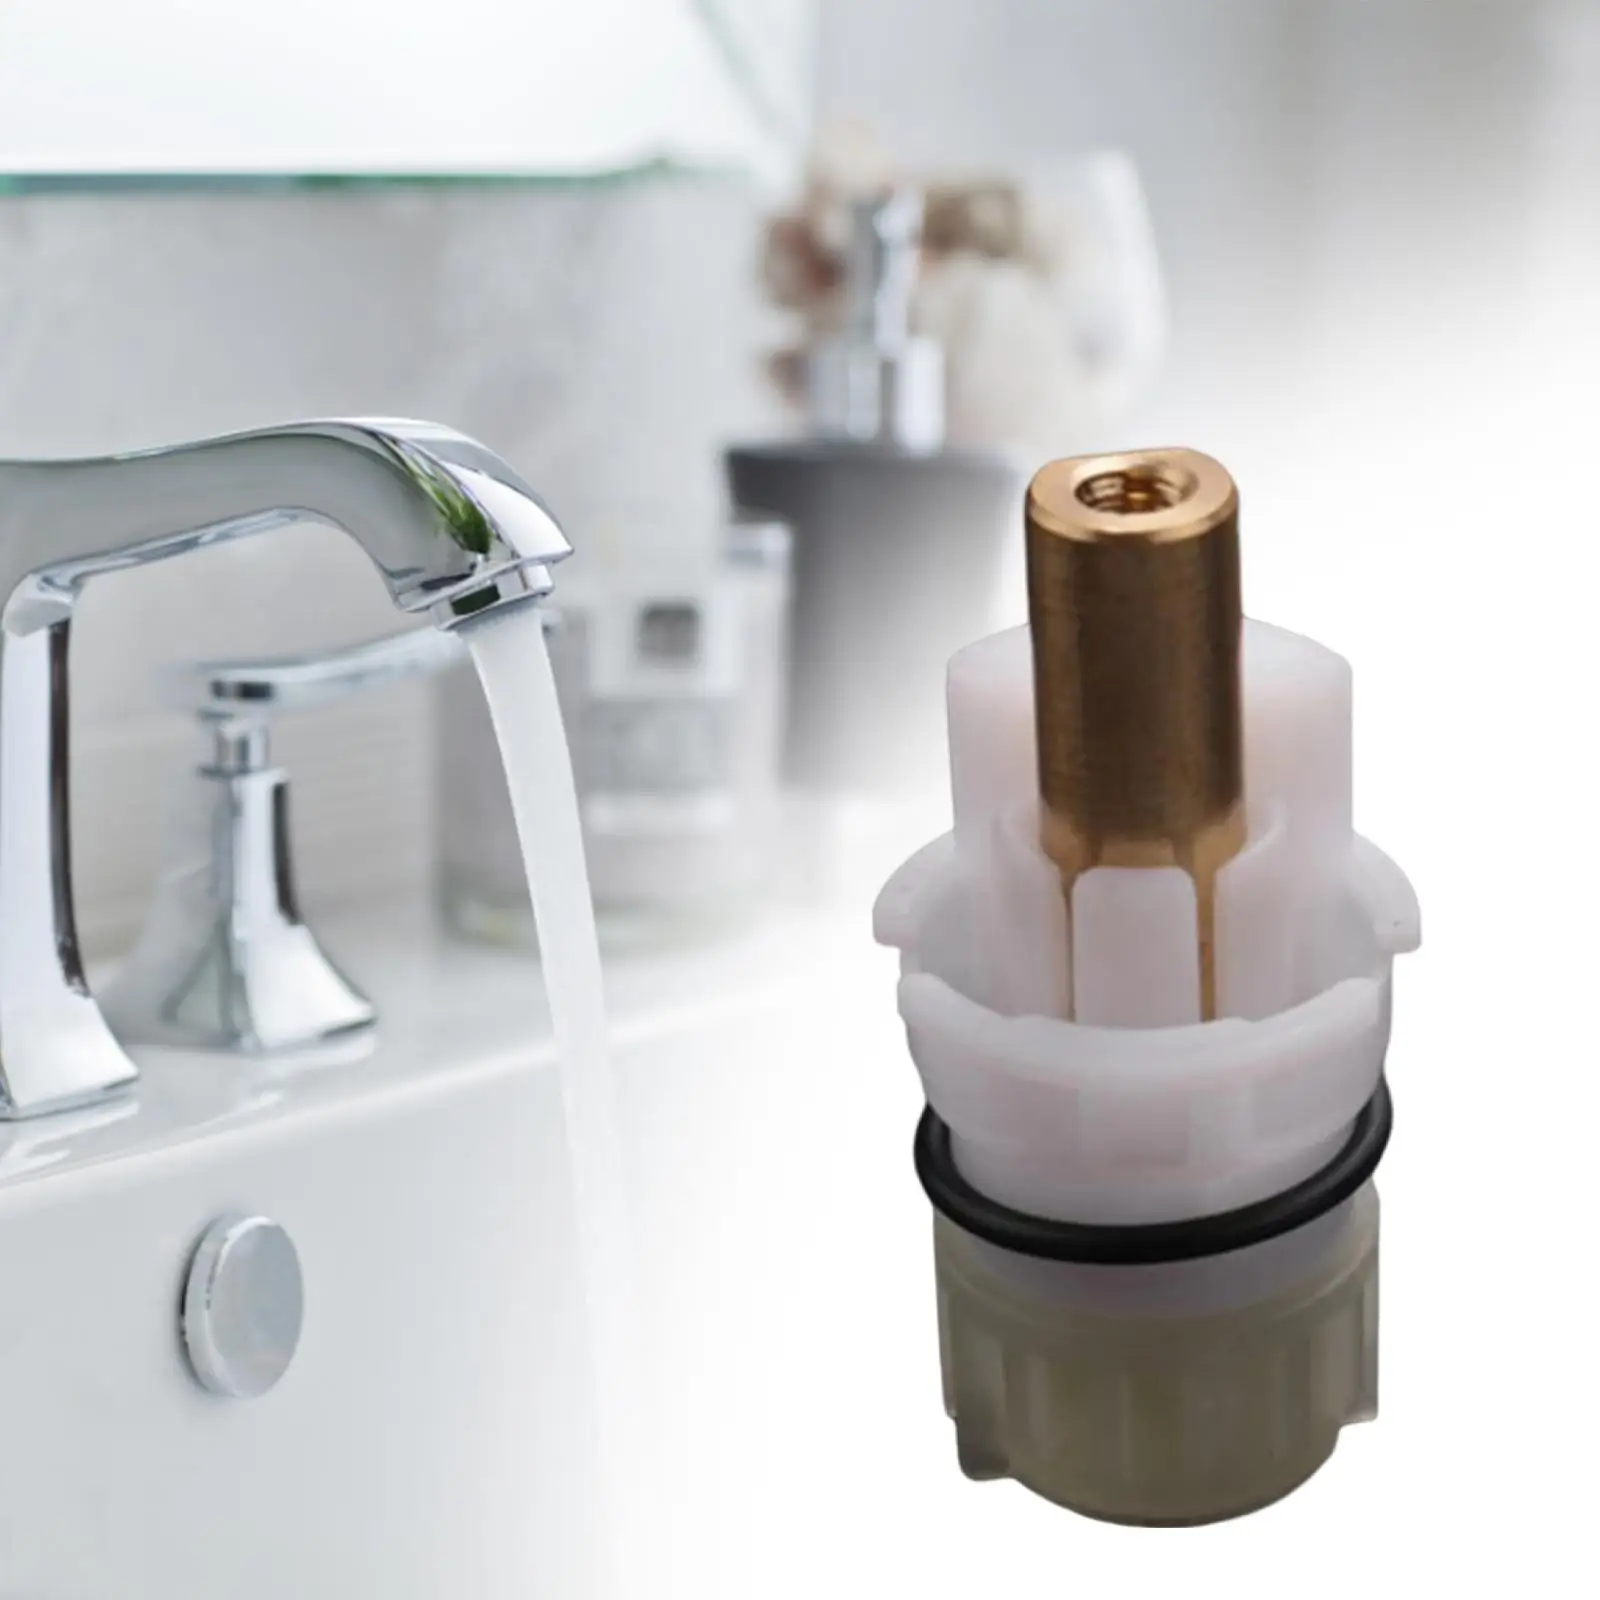 Faucet Stem Replacement RP25513 for Delta Faucet Kit Direct Replaces Durable